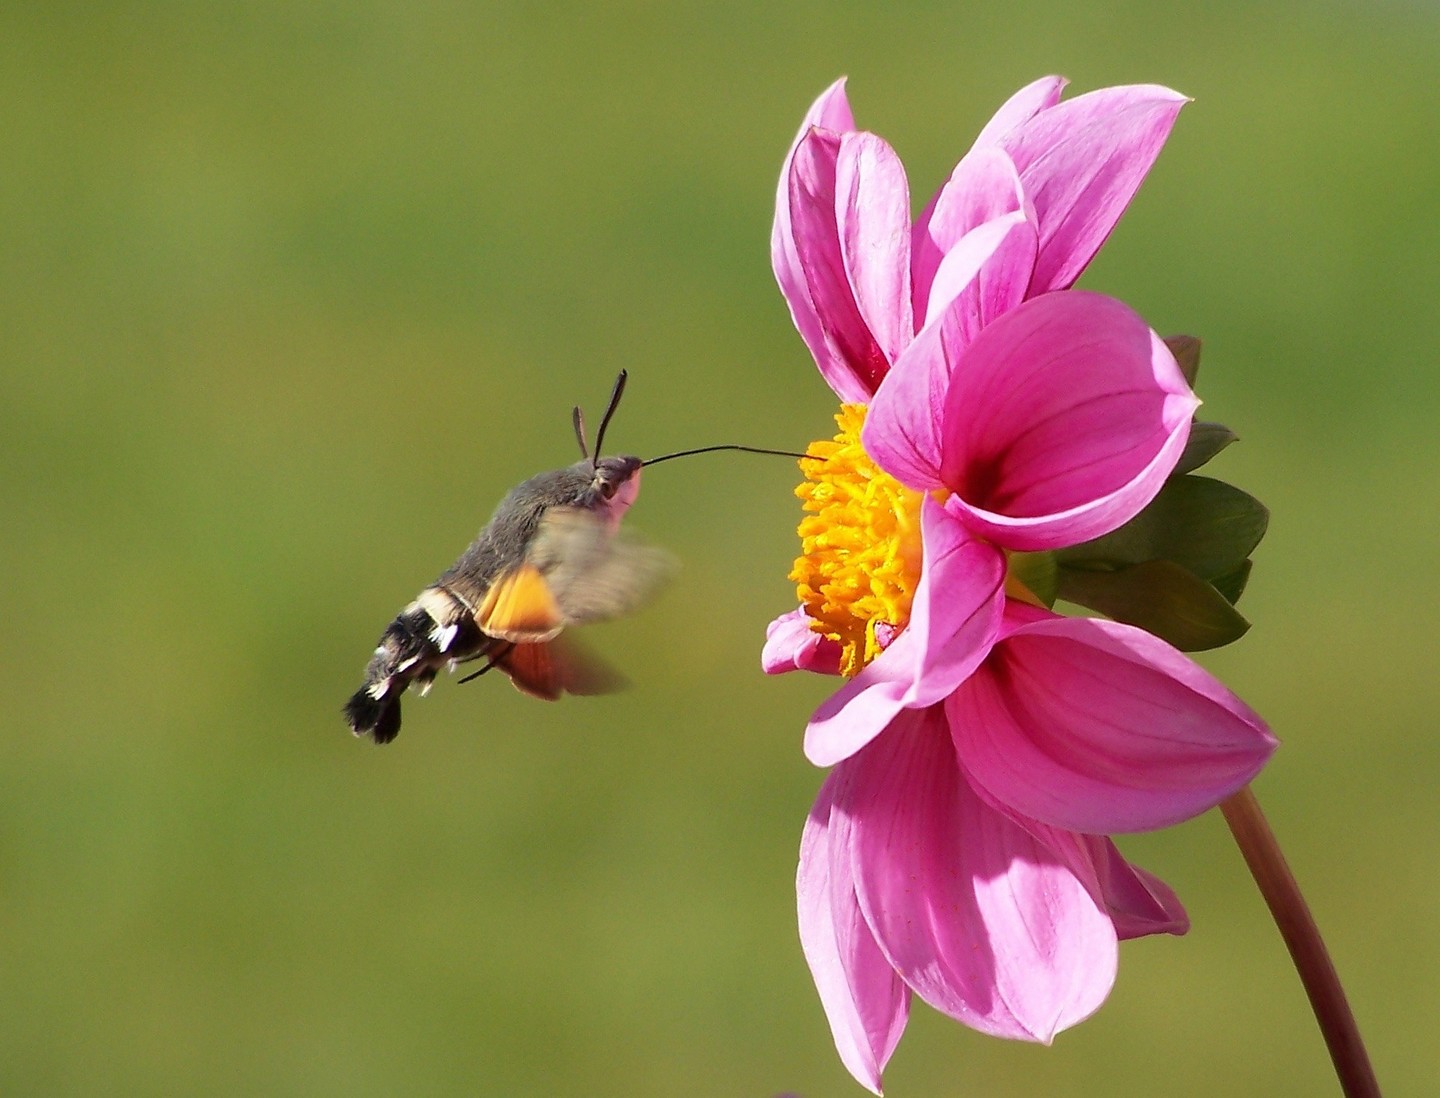 Sortie : Incroyables pollinisateurs